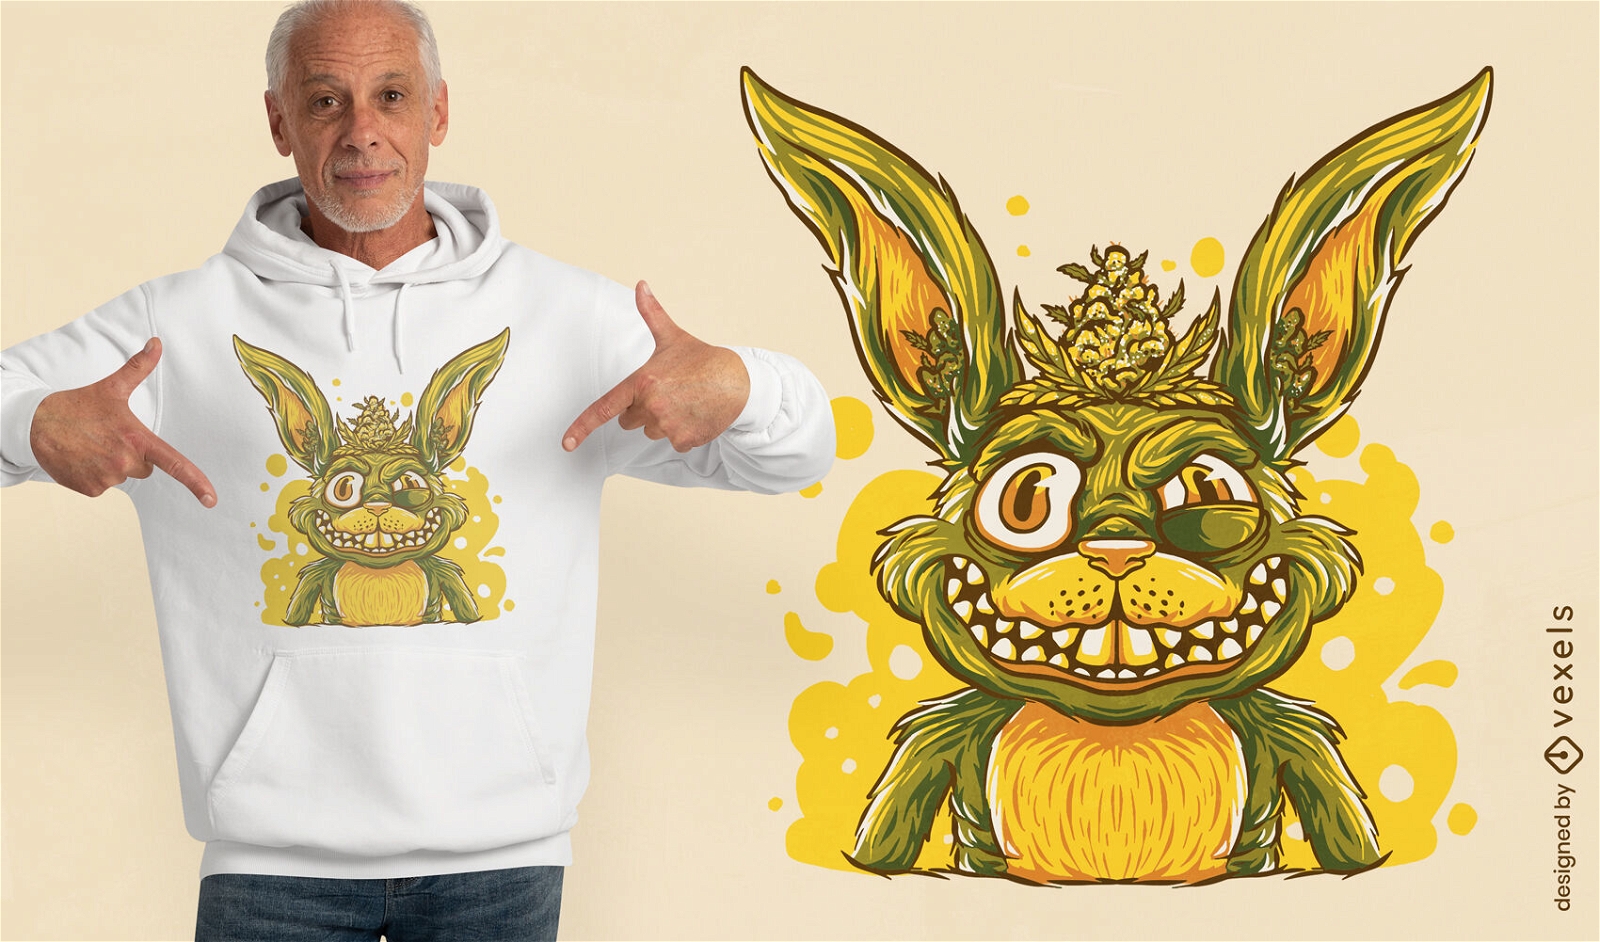 Weed bunny t-shirt design